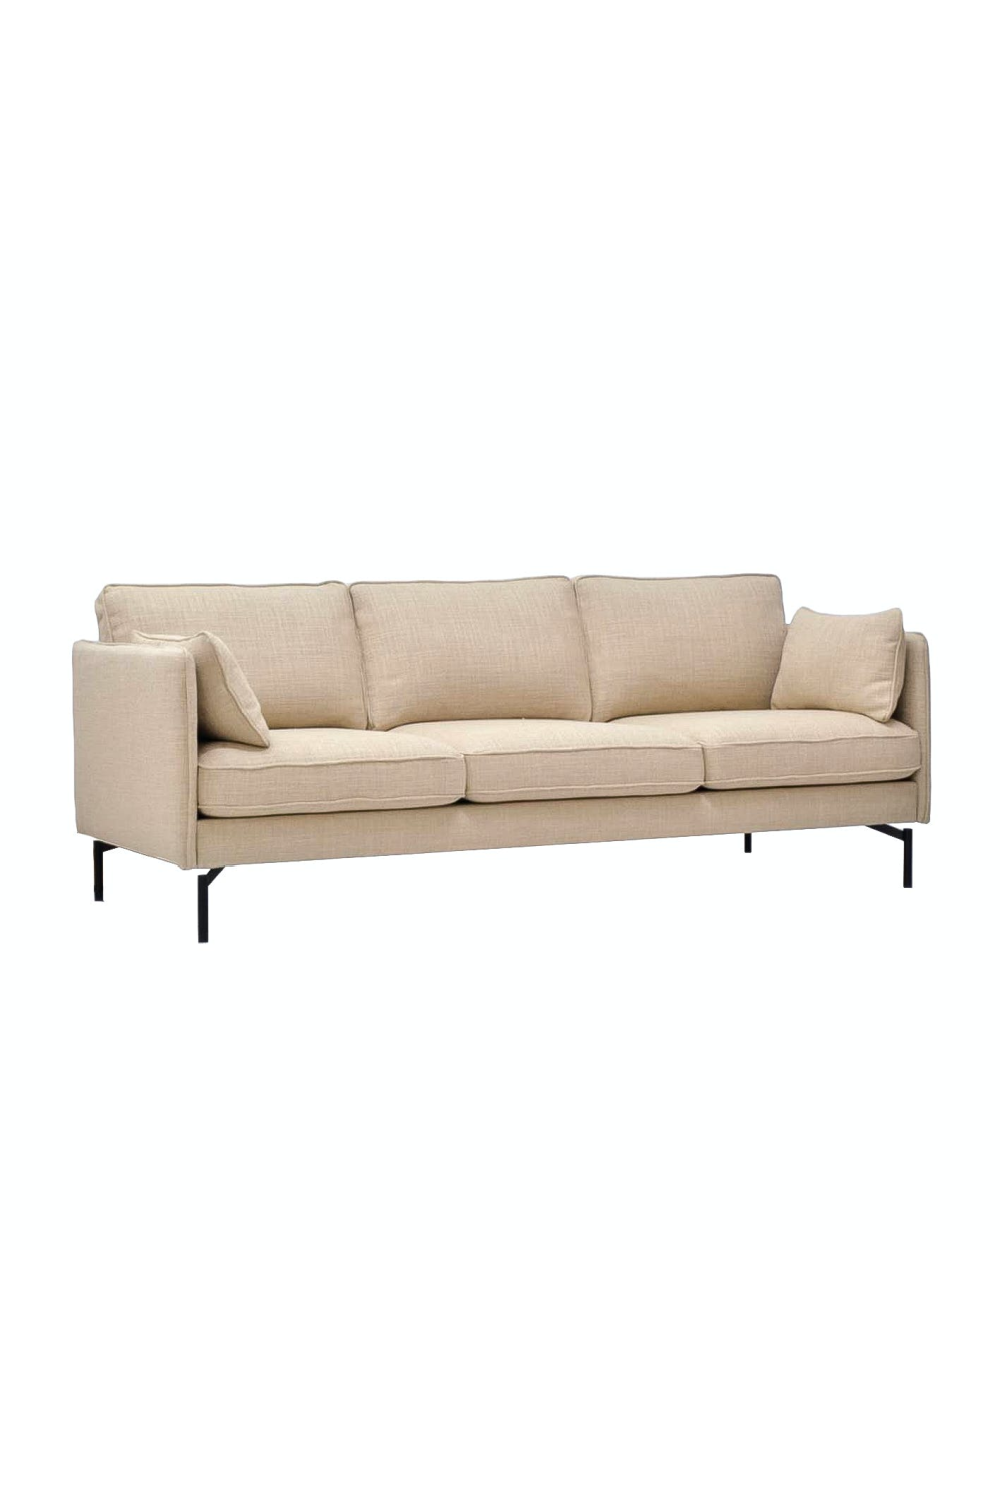 Extra Large Beige Sofa | Pols Potten PPno.2  | OROA.com